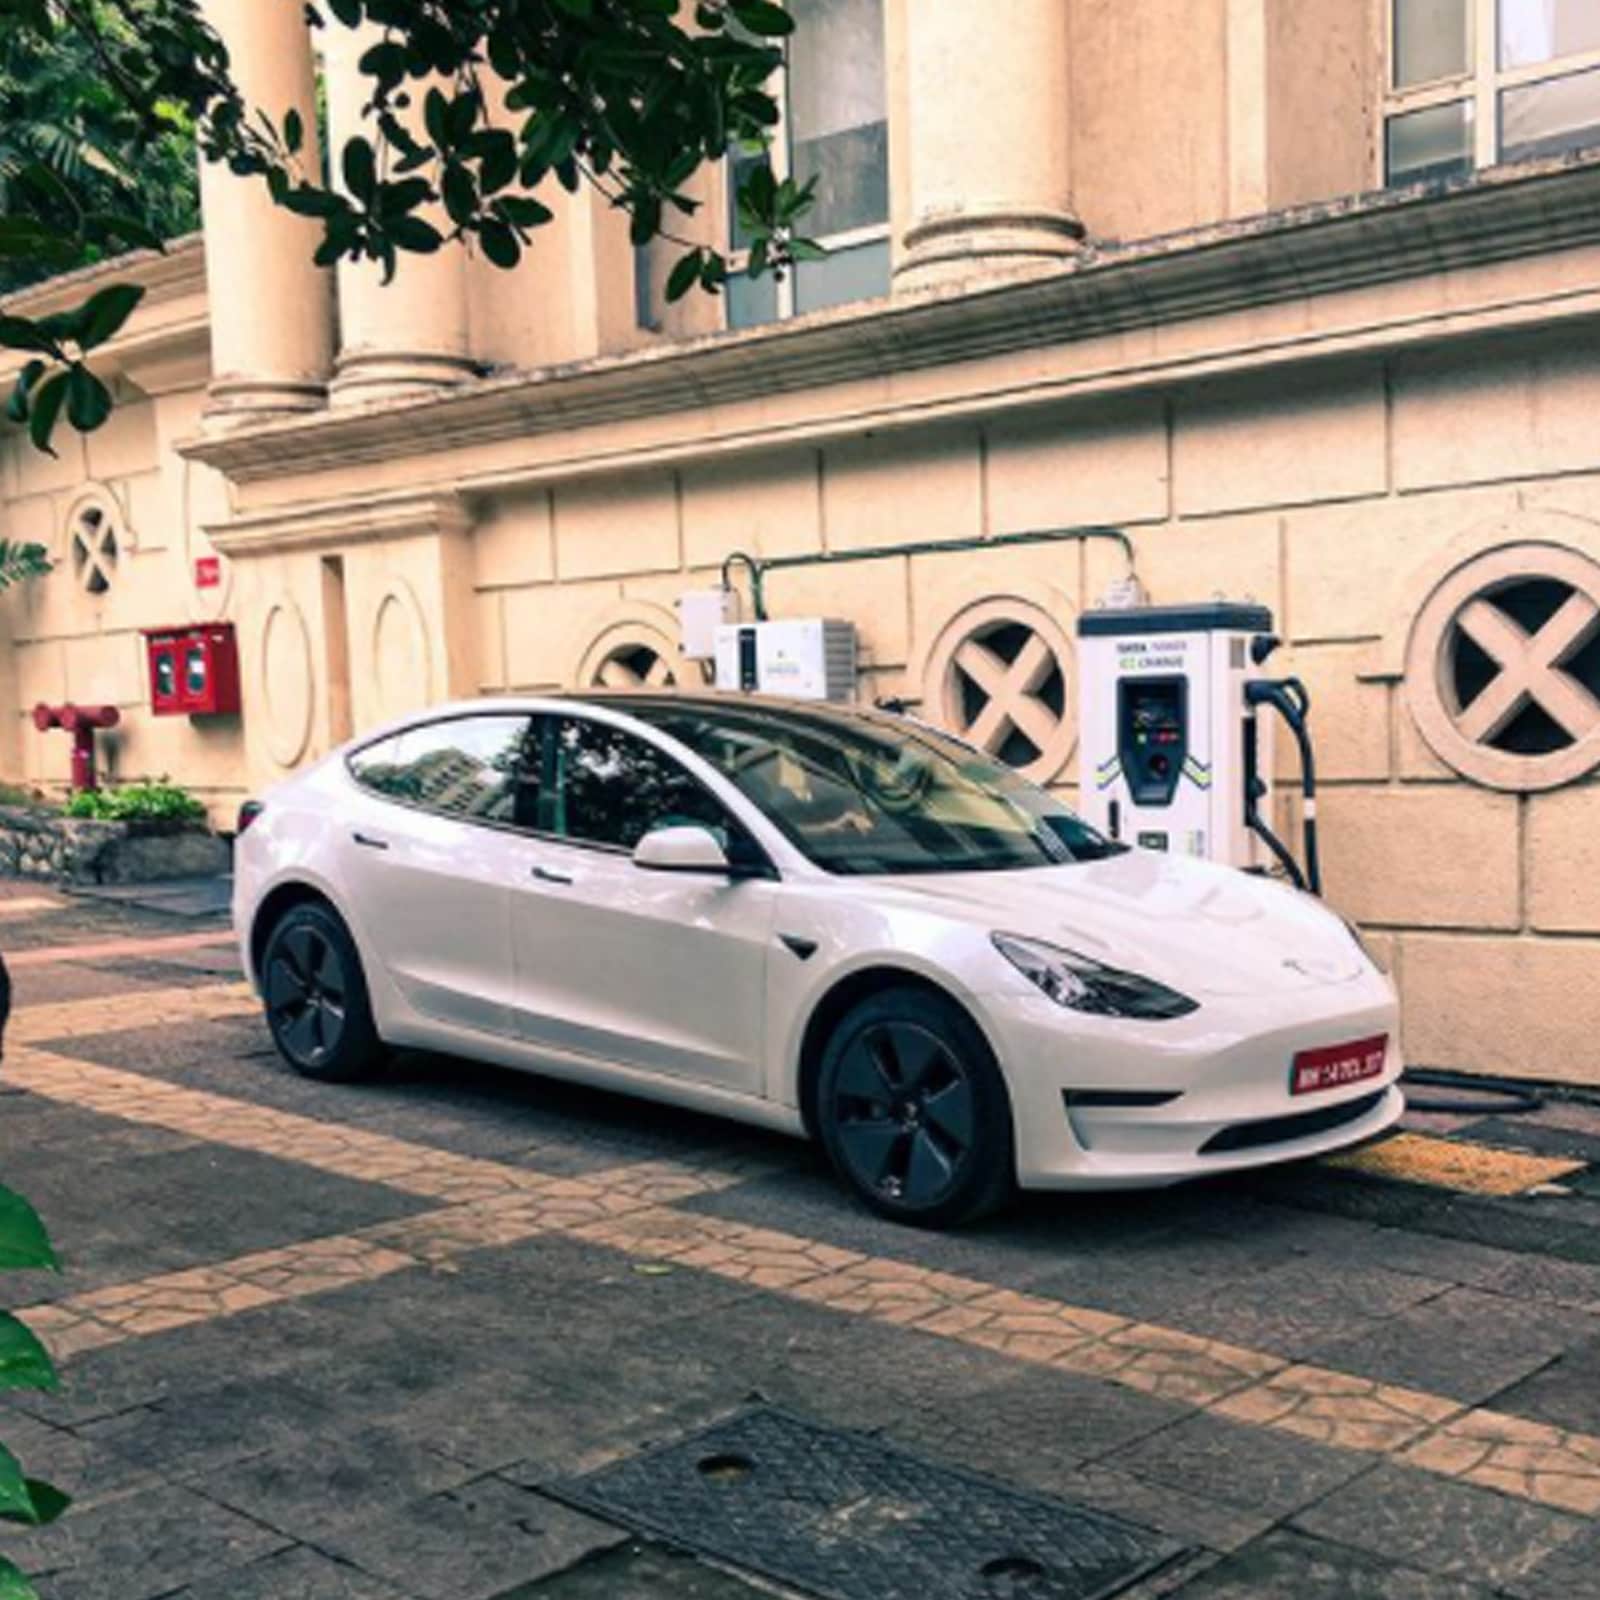 Tesla Model 3 Electric Sedan Spotted Charging in Mumbai, See Pics - News18